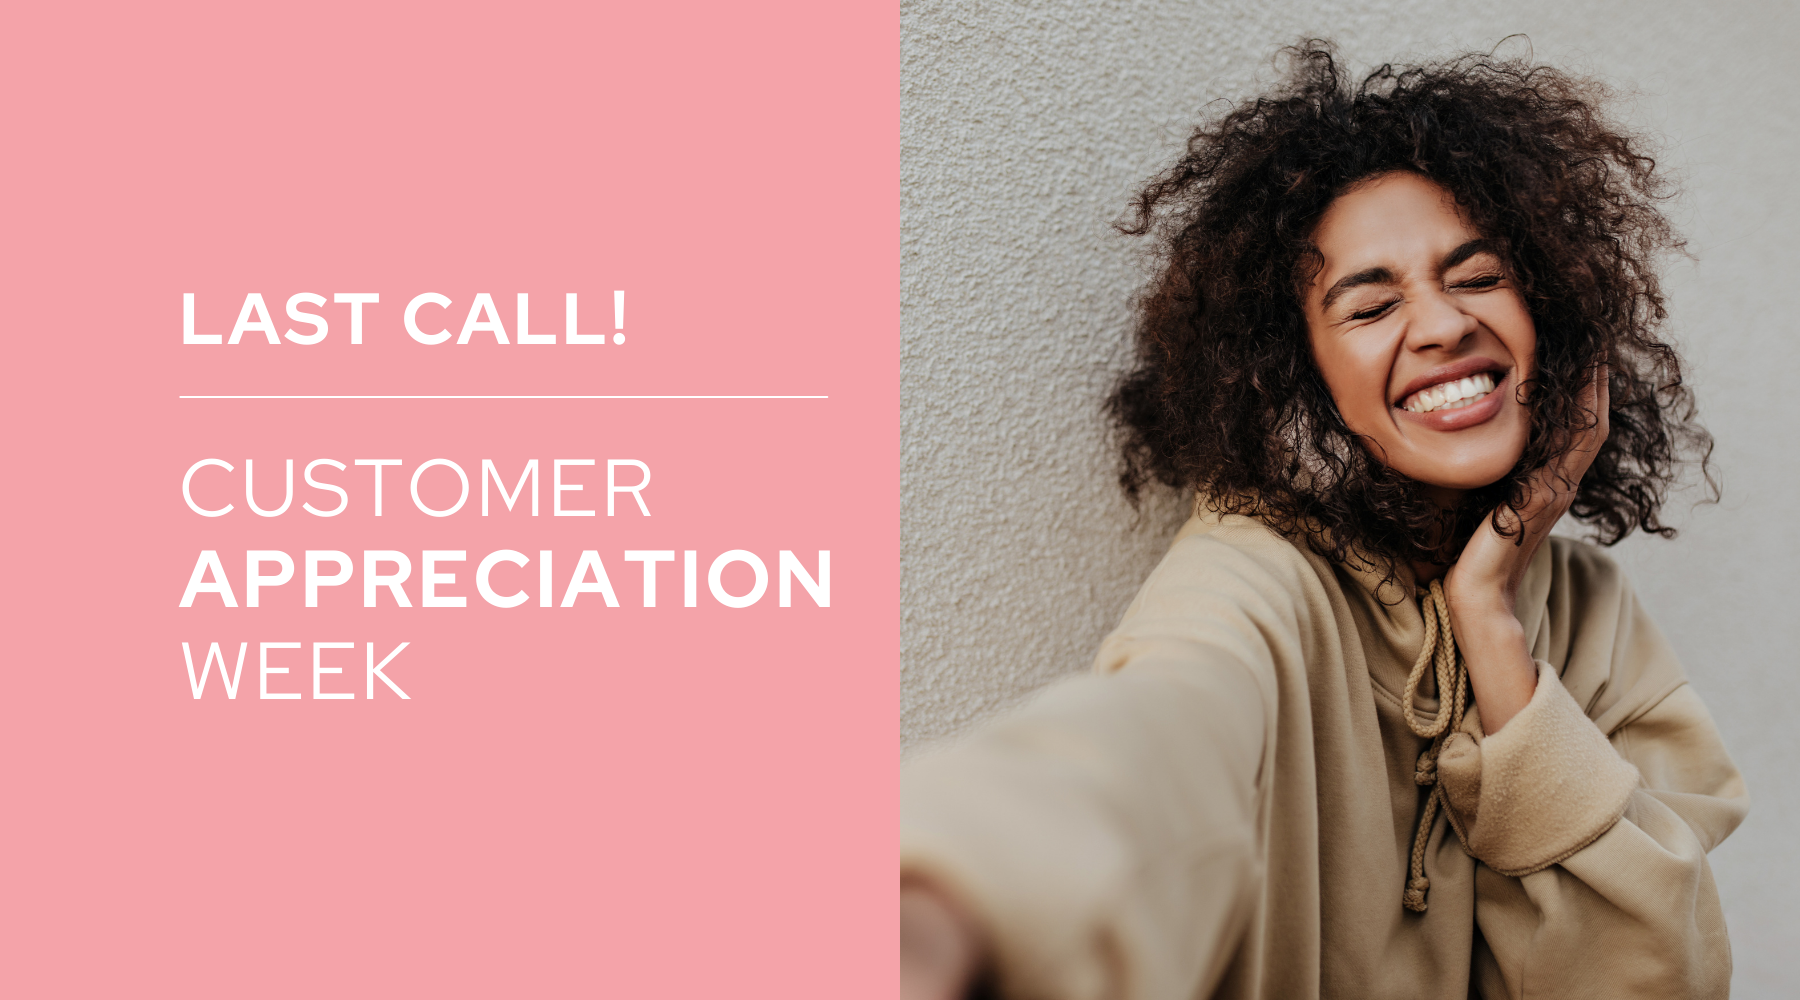 Last Call - Customer Appreciation Week